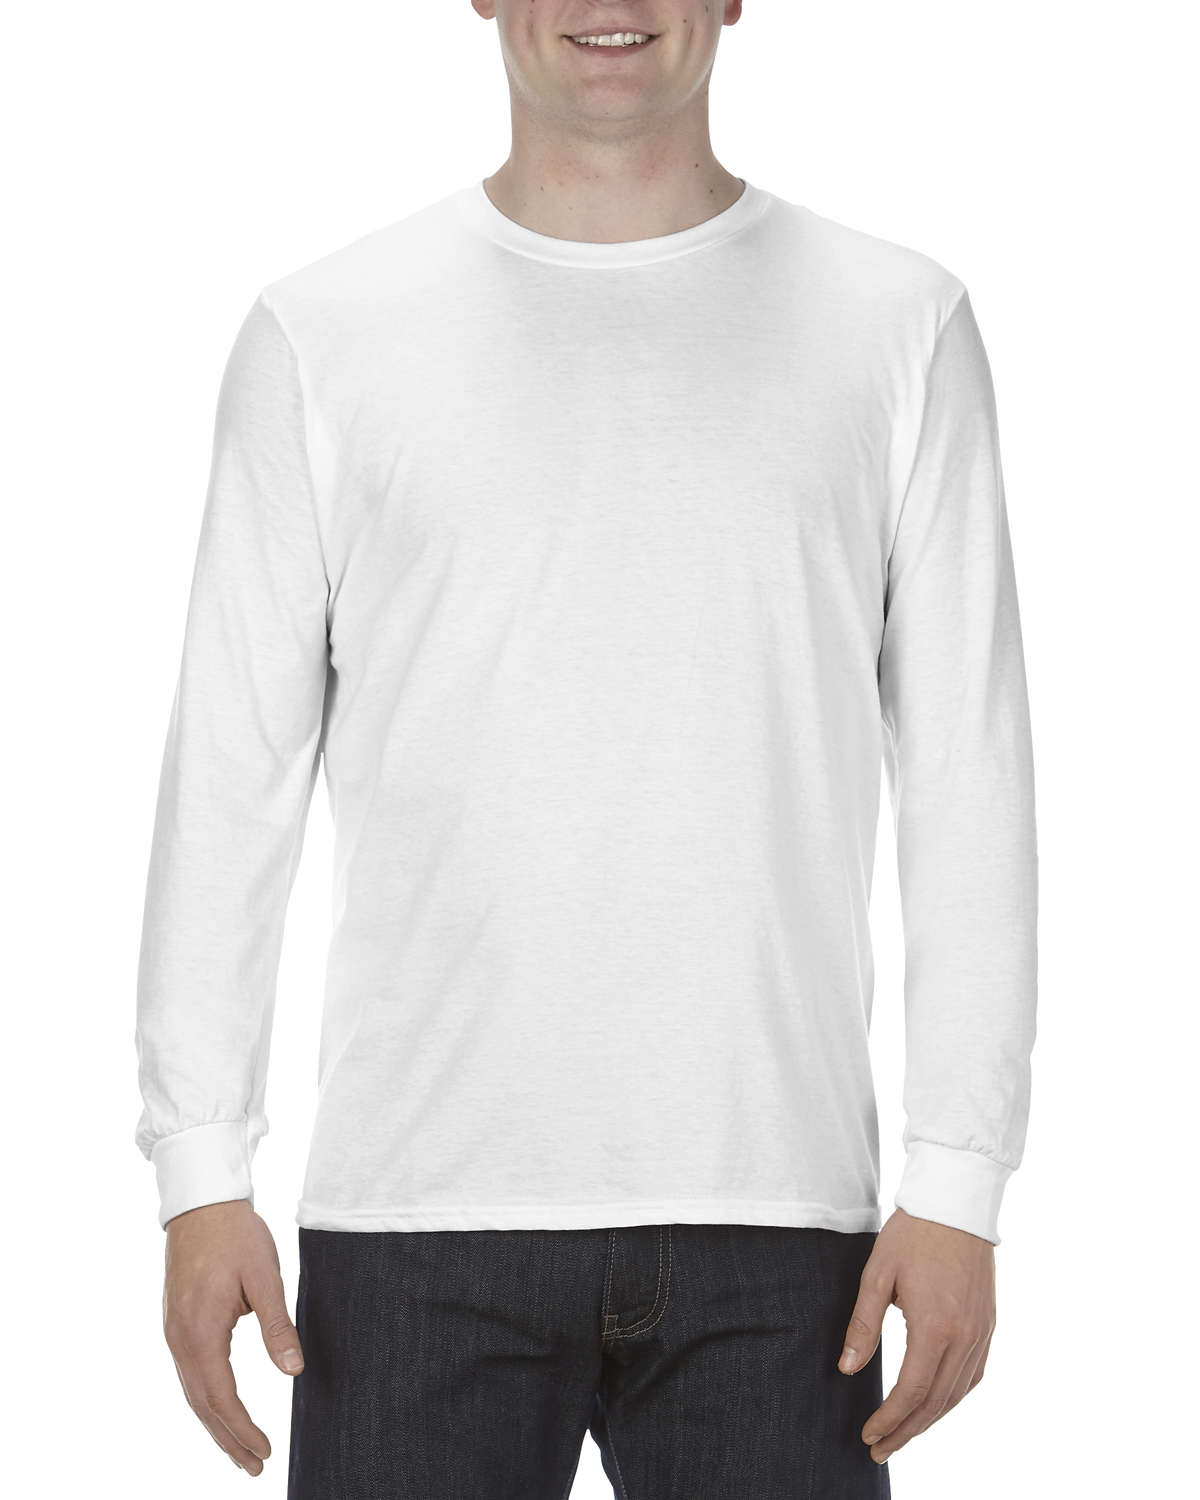 'Alstyle AL5304 Adult Ringspun Cotton Long-Sleeve T-Shirt '